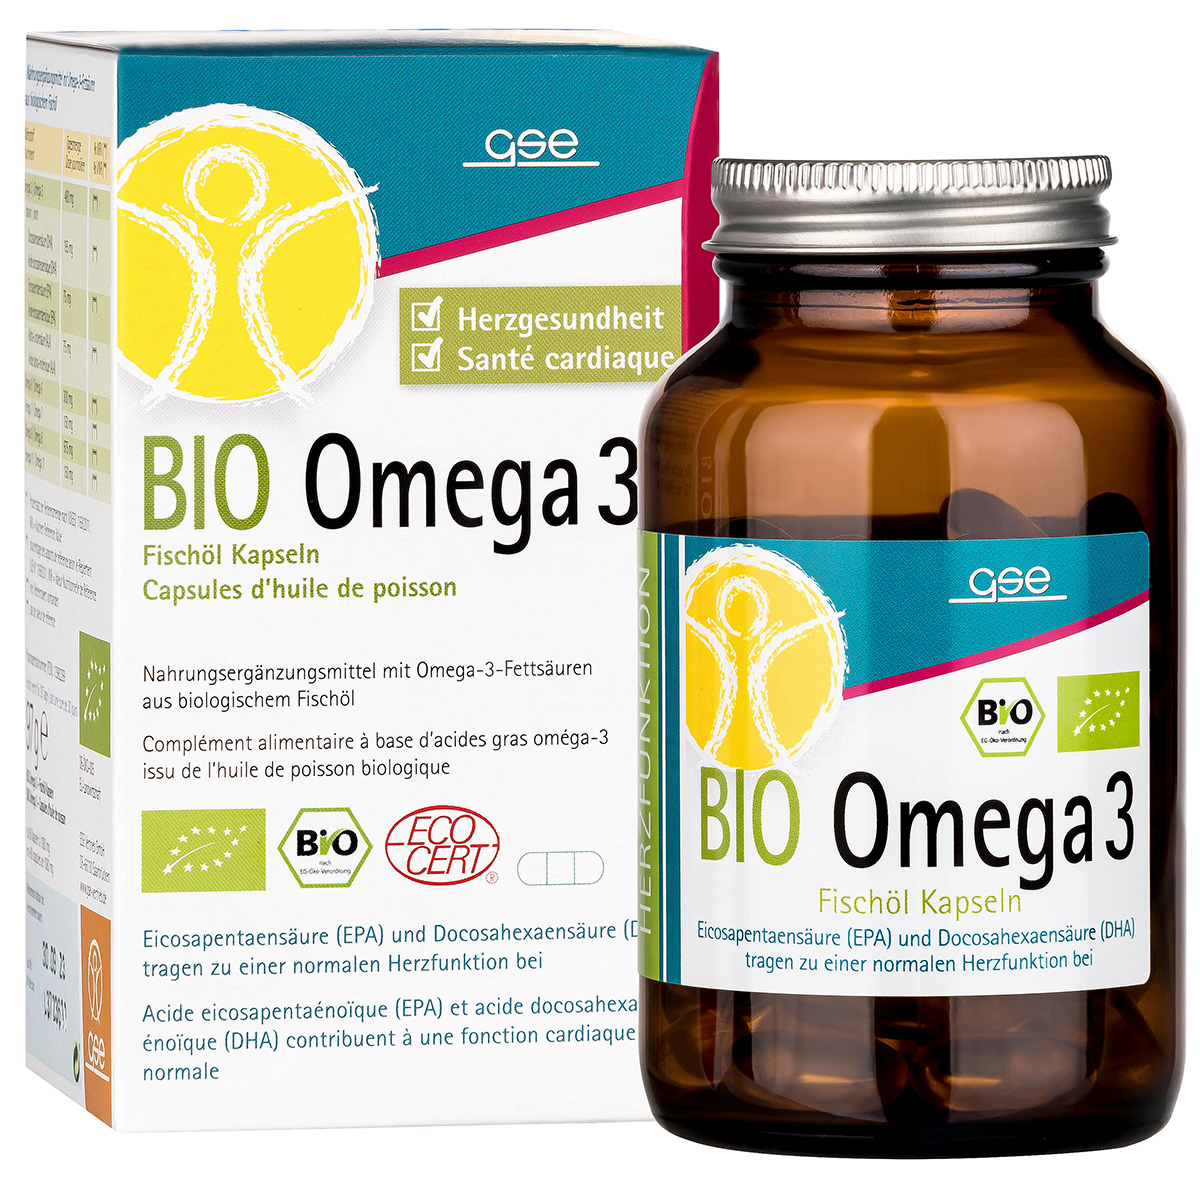 Omega 3 - Fischöl Kapseln (Bio)